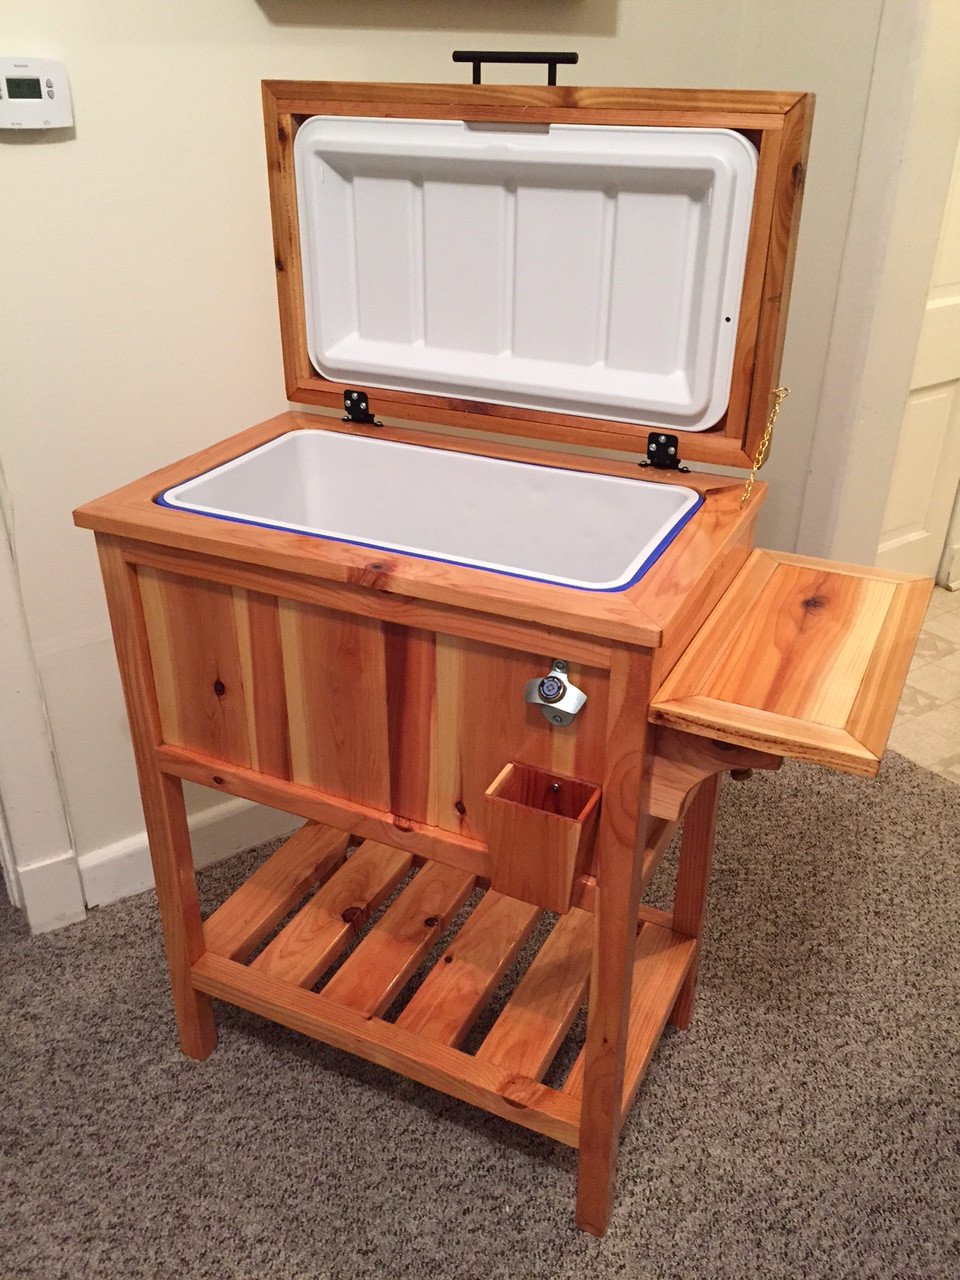 DIY Cooler Box Plans
 wooden cooler stand